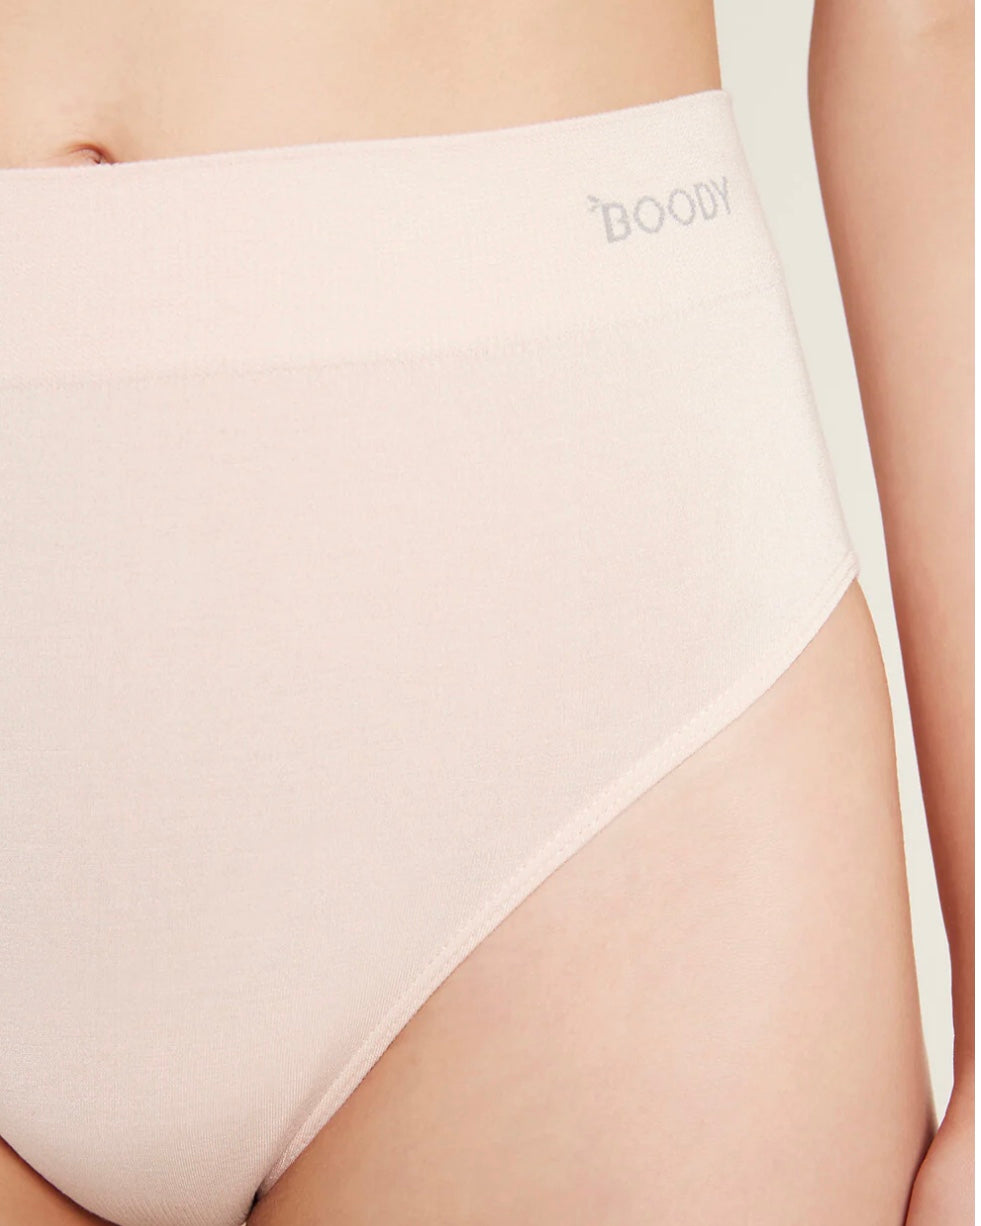 Women's Full Briefs, Bamboo Underwear For Women